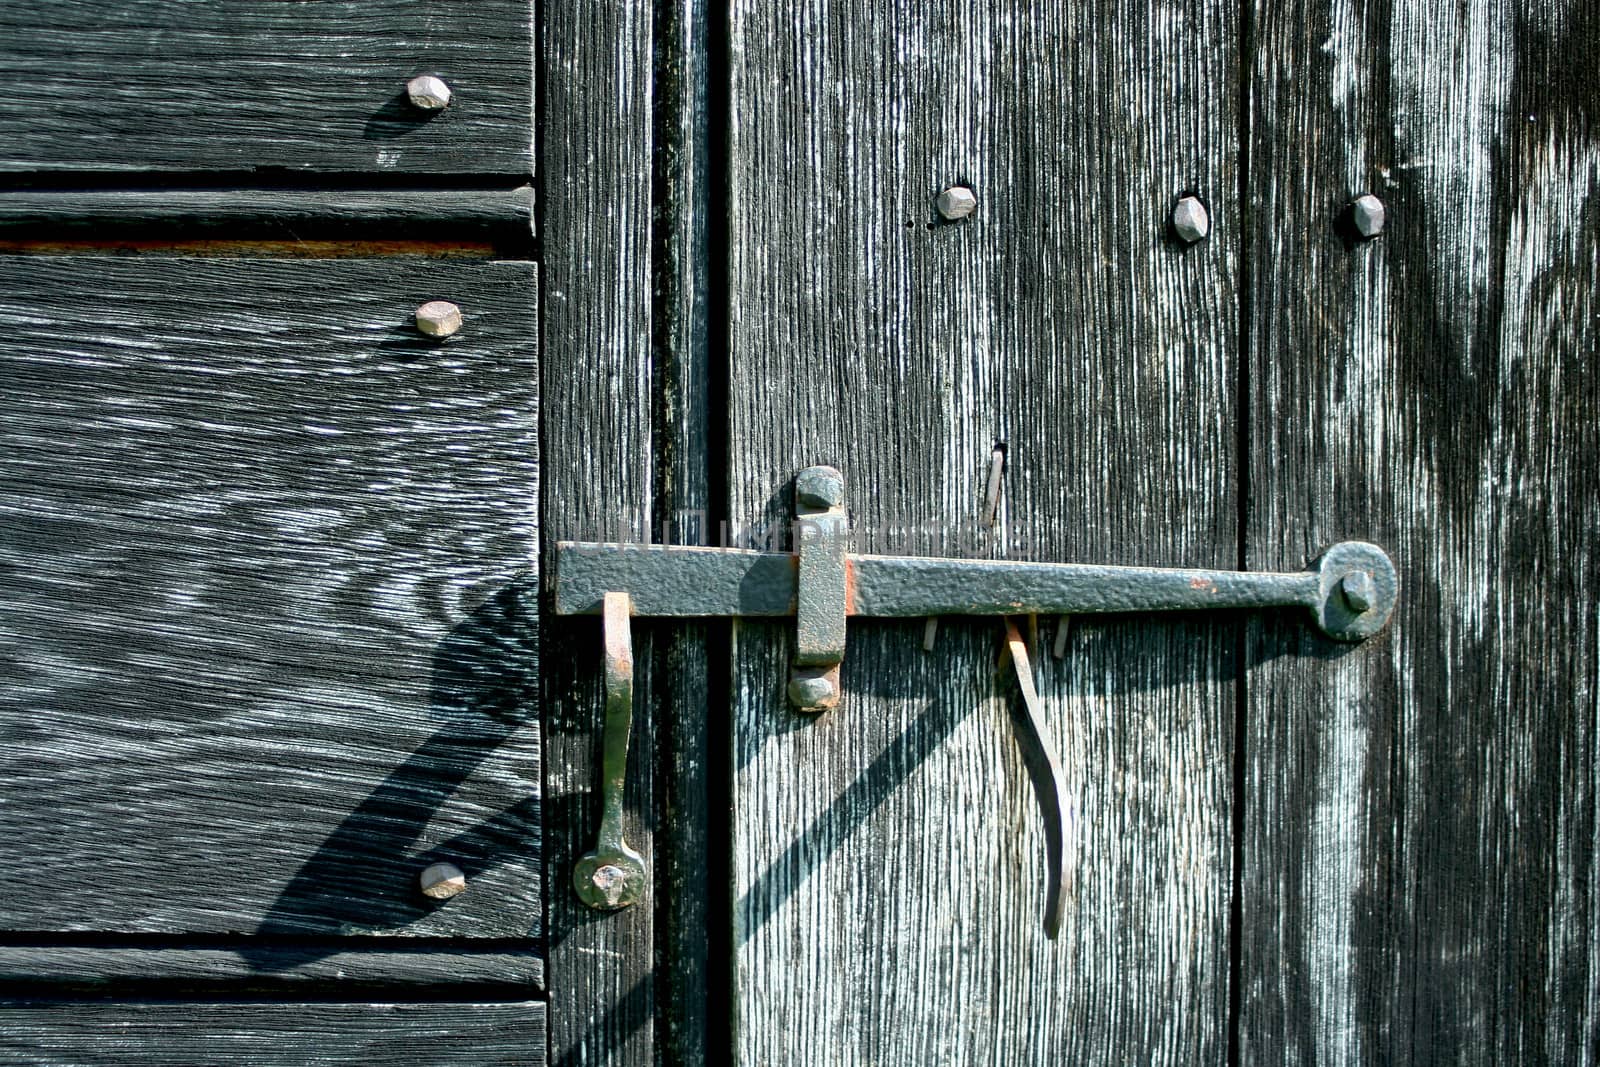 A Old iron door latch